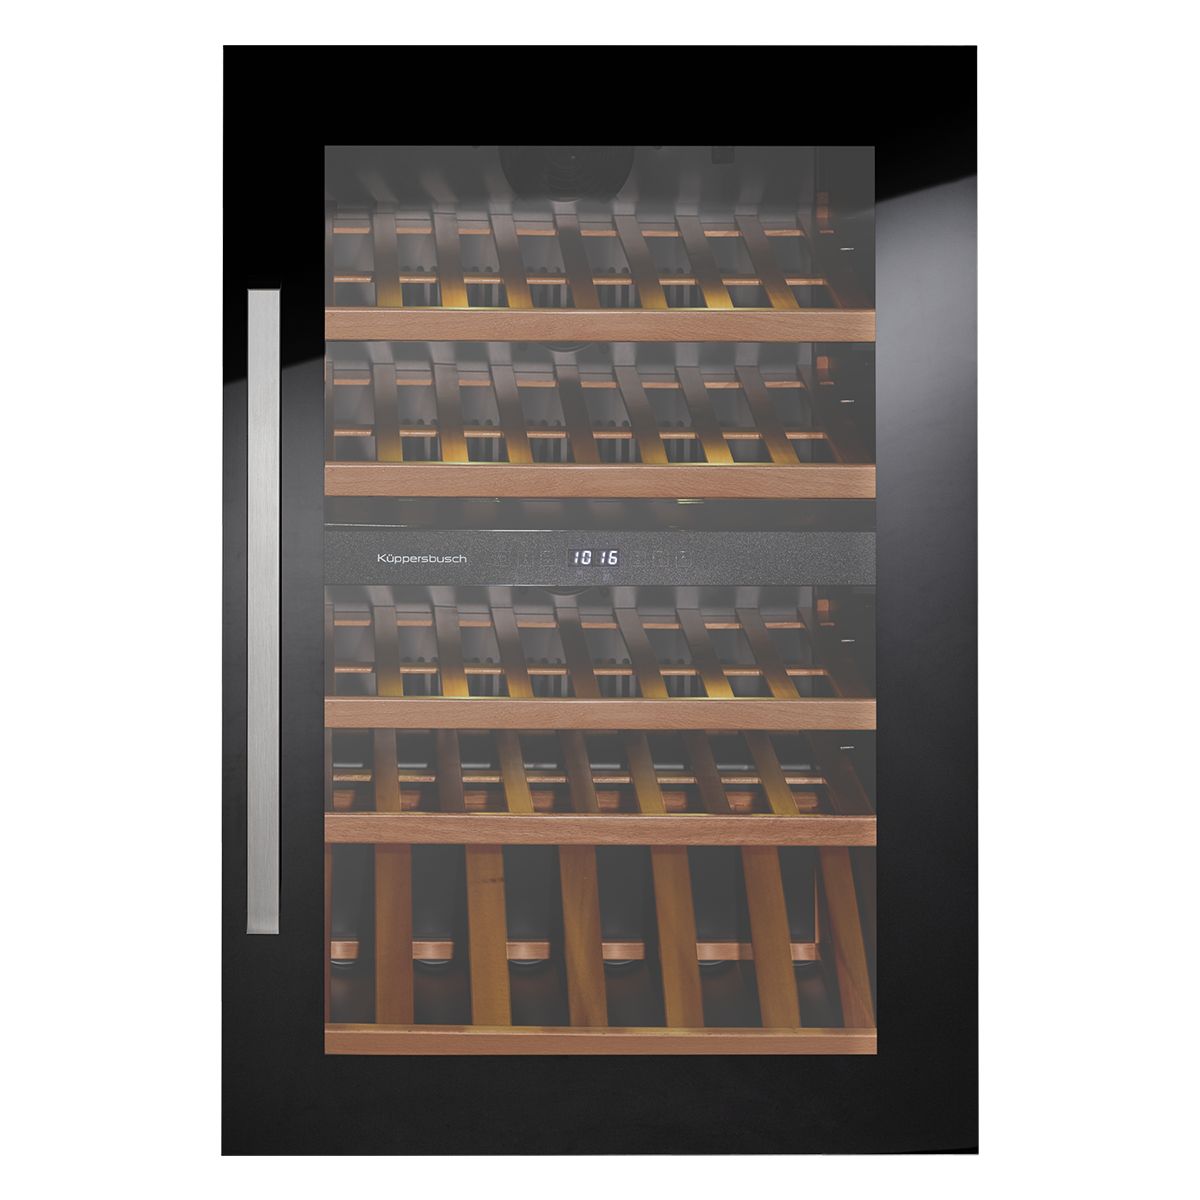 Встраиваемый винный шкаф Kuppersbusch FWK 2800.0 S1 Stainless Steel